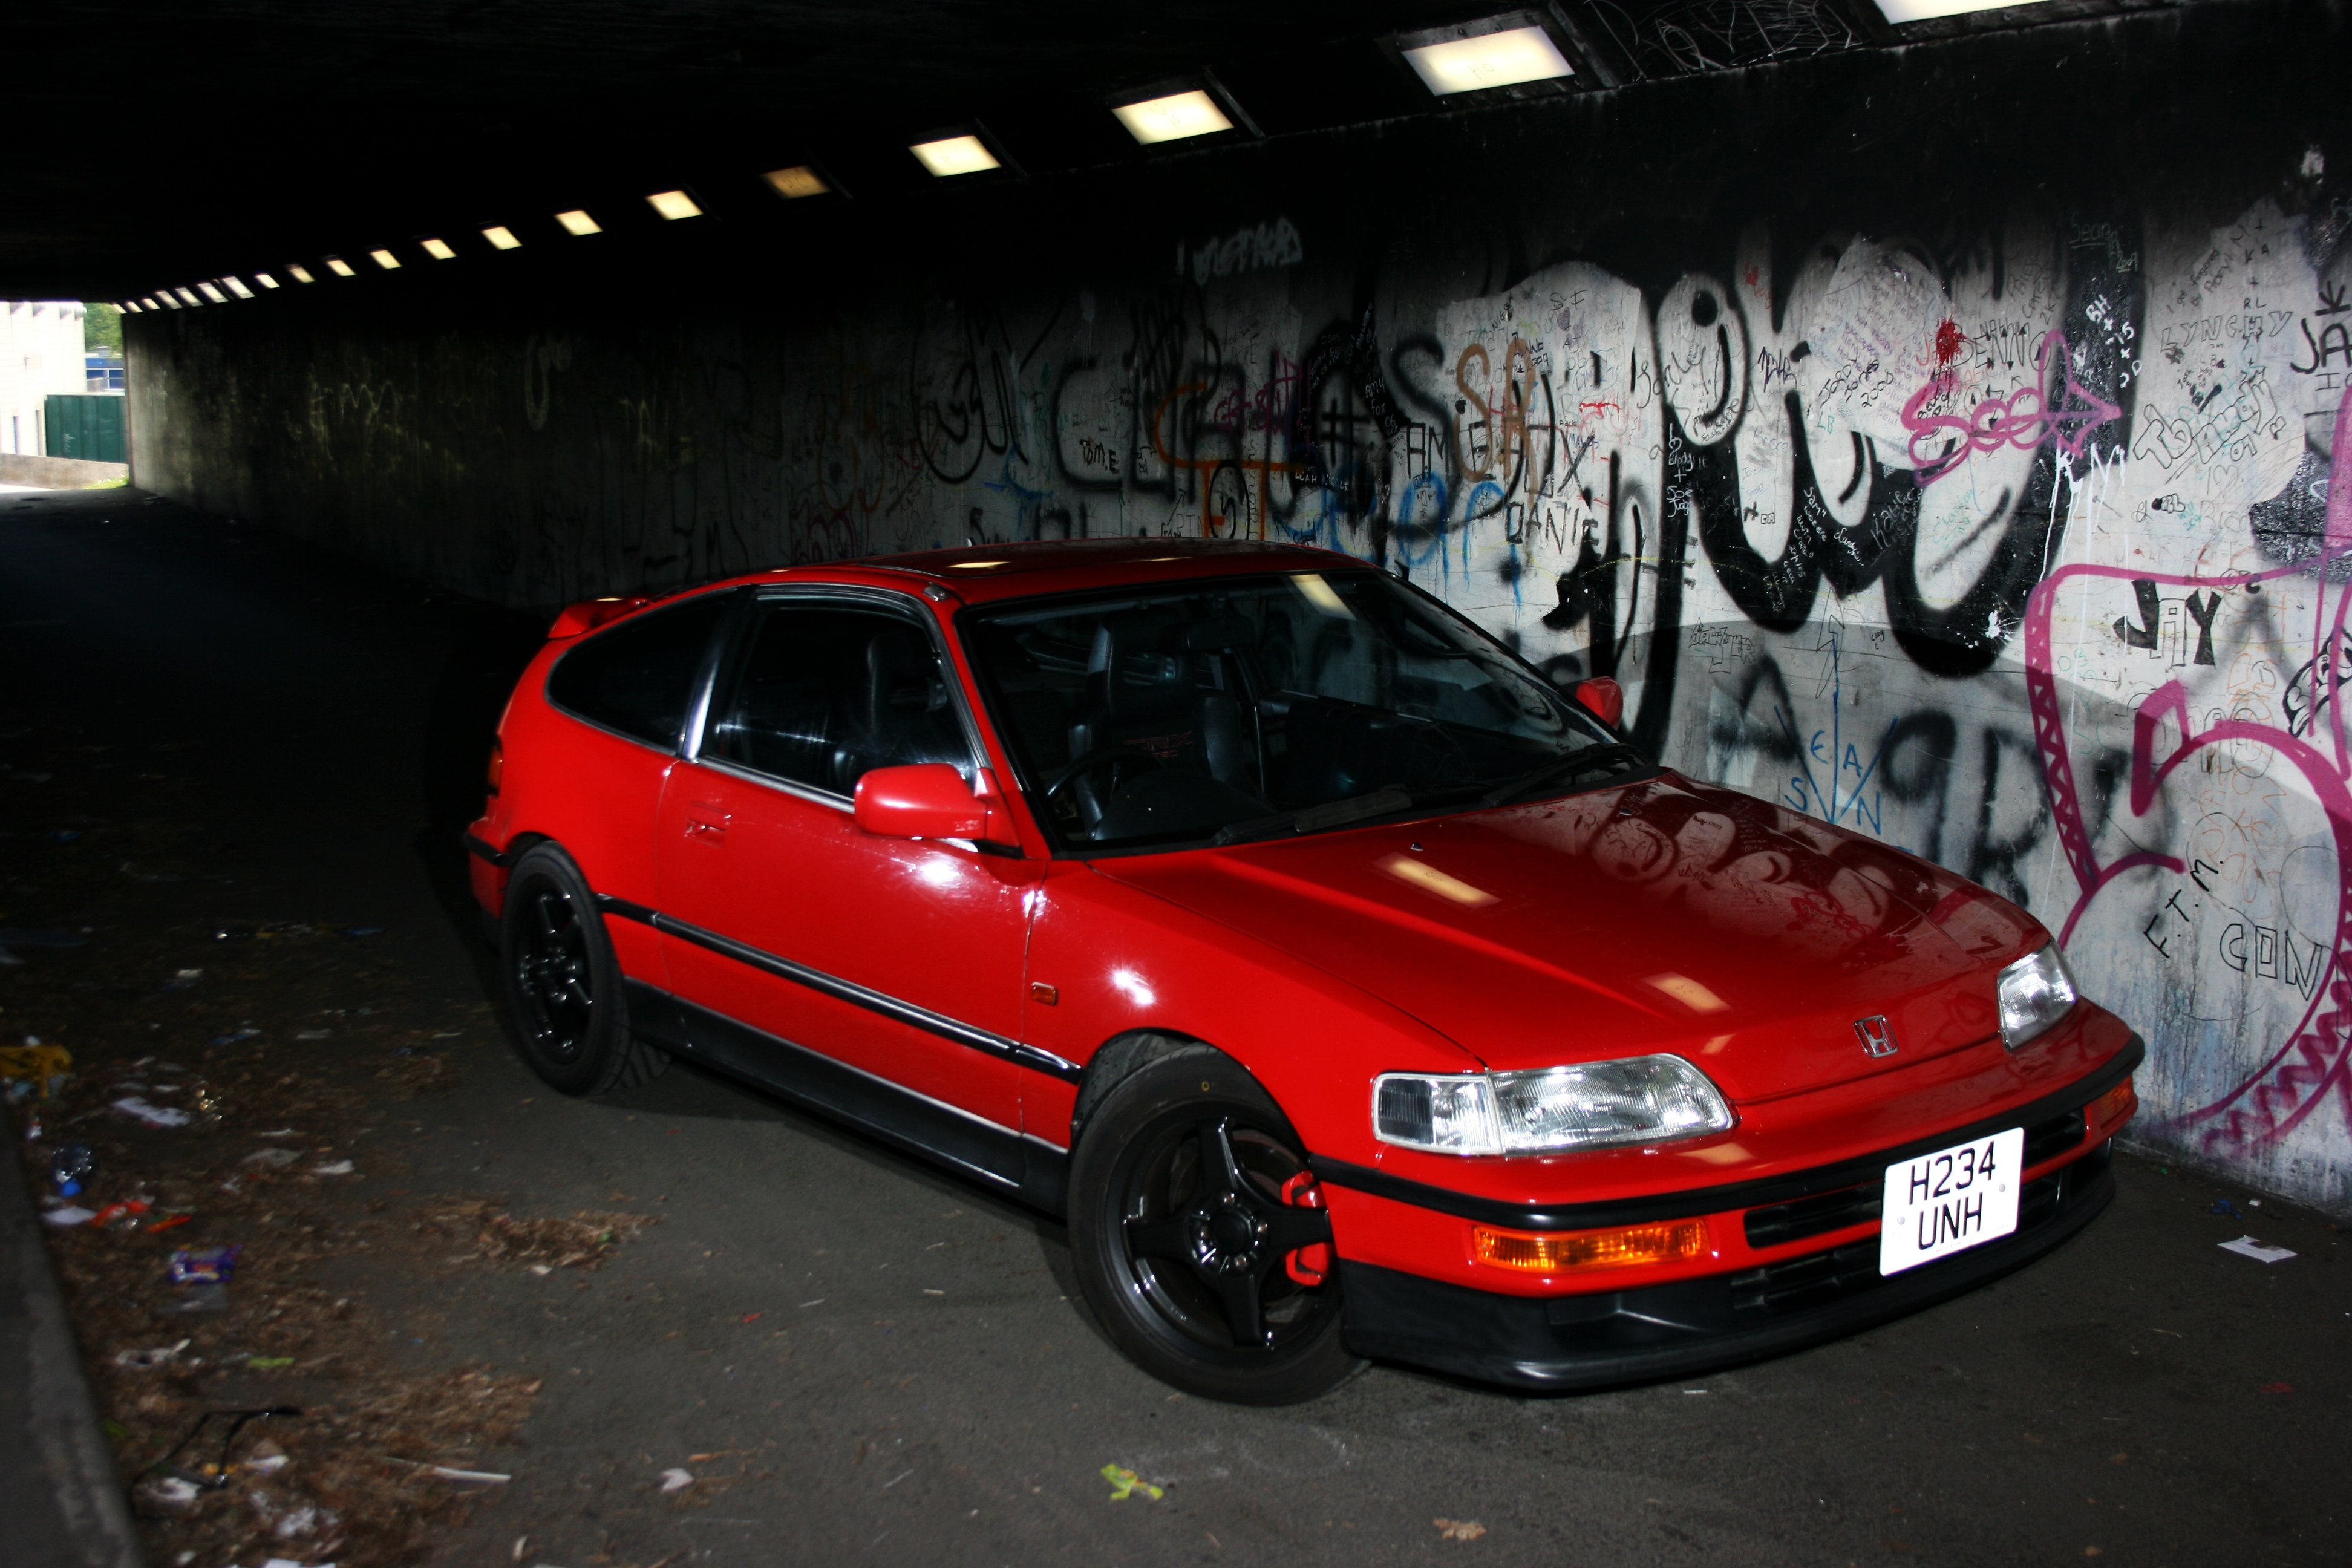 Honda CRX coupe tuning japan cars wallpaper 3888x2592 498930